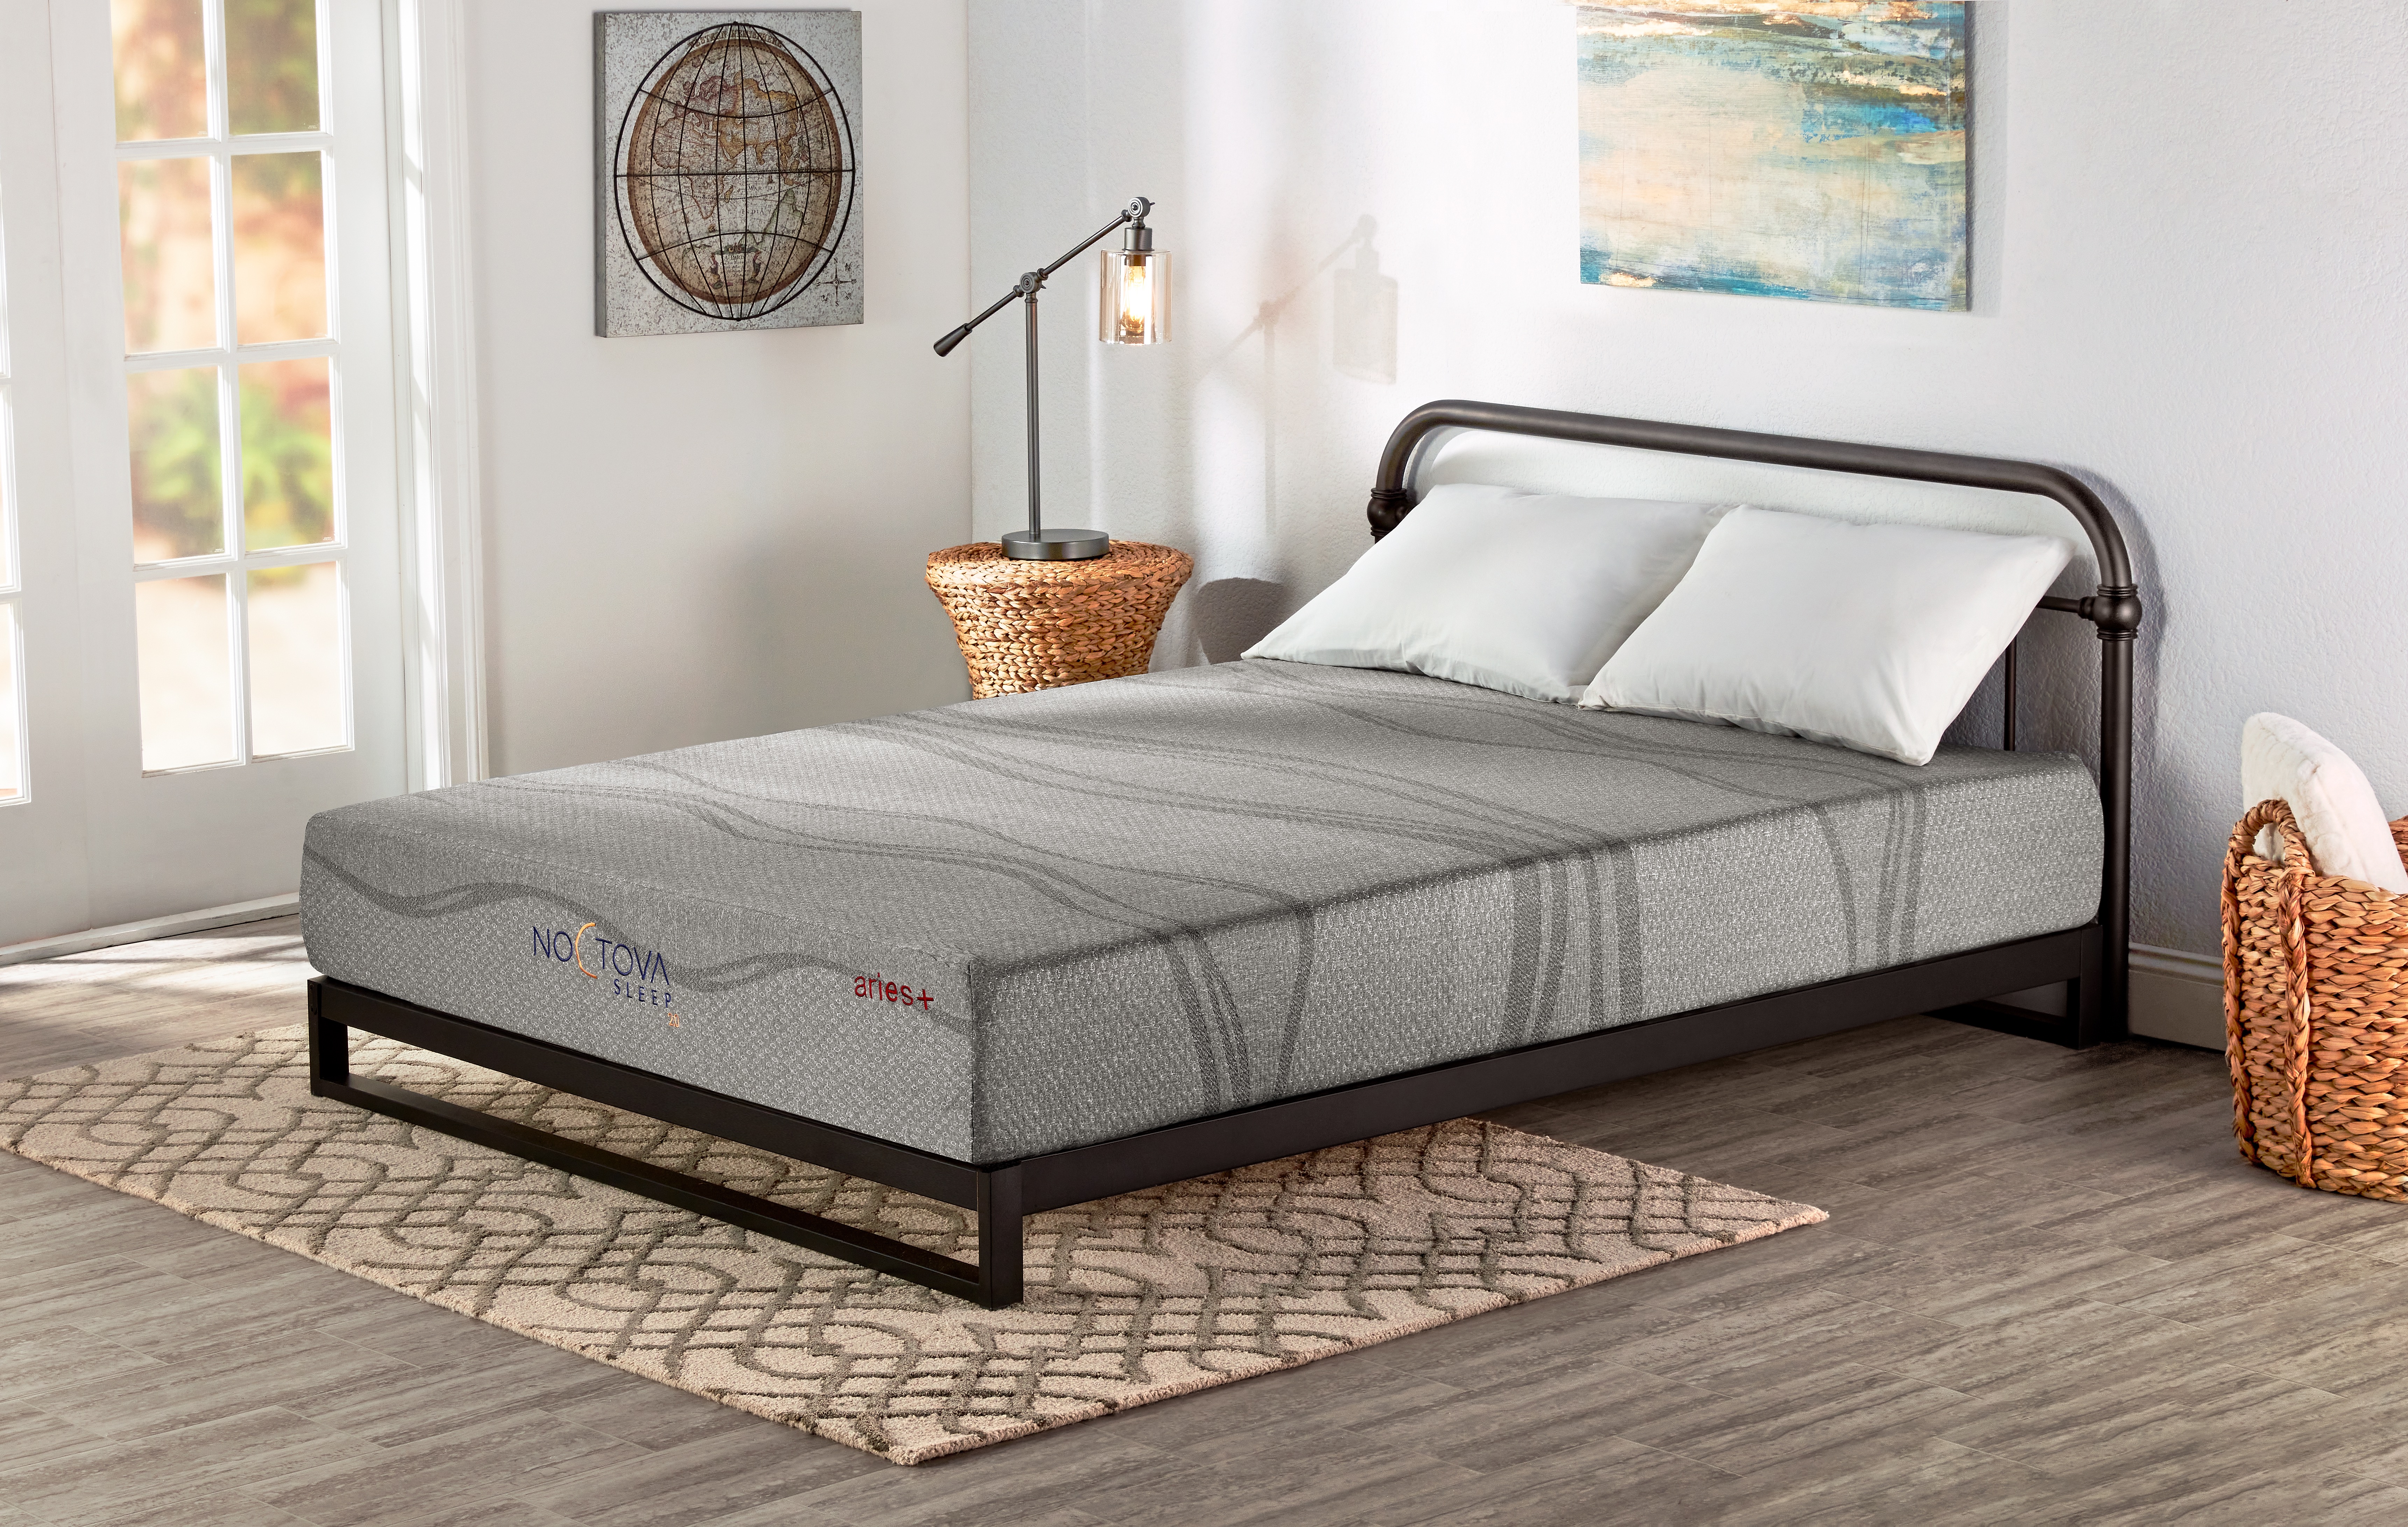 noctova aries mattress for sale